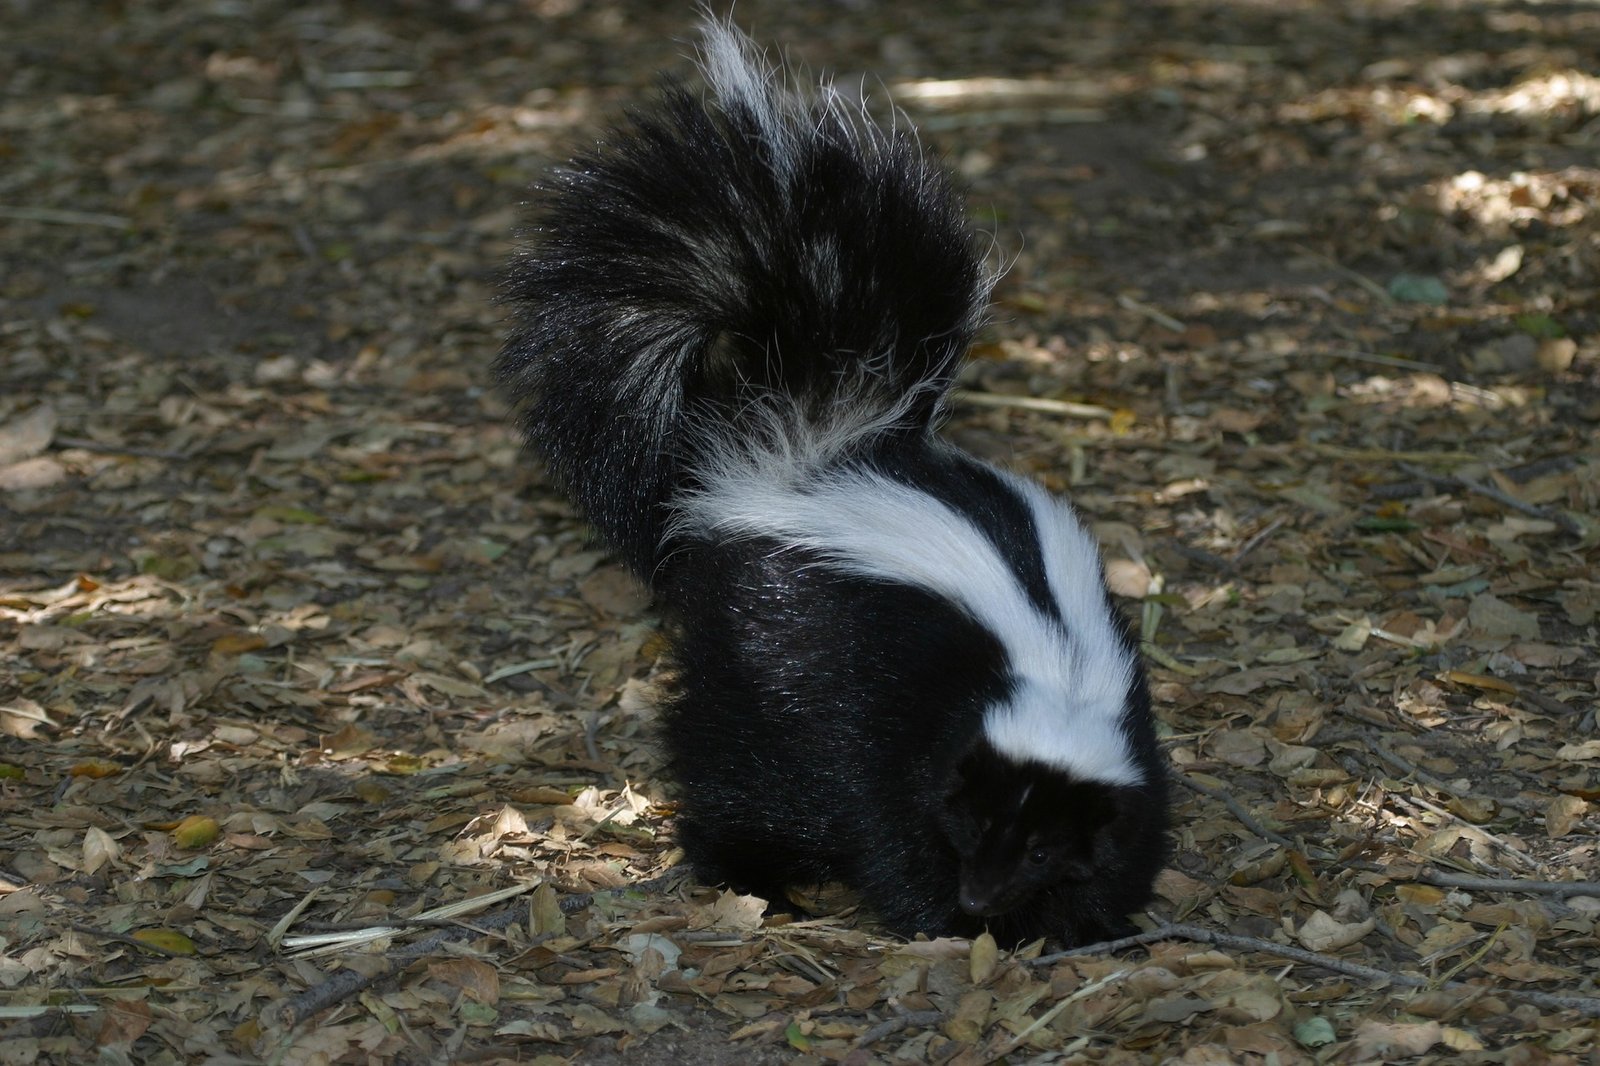 Image of skunk in backyard